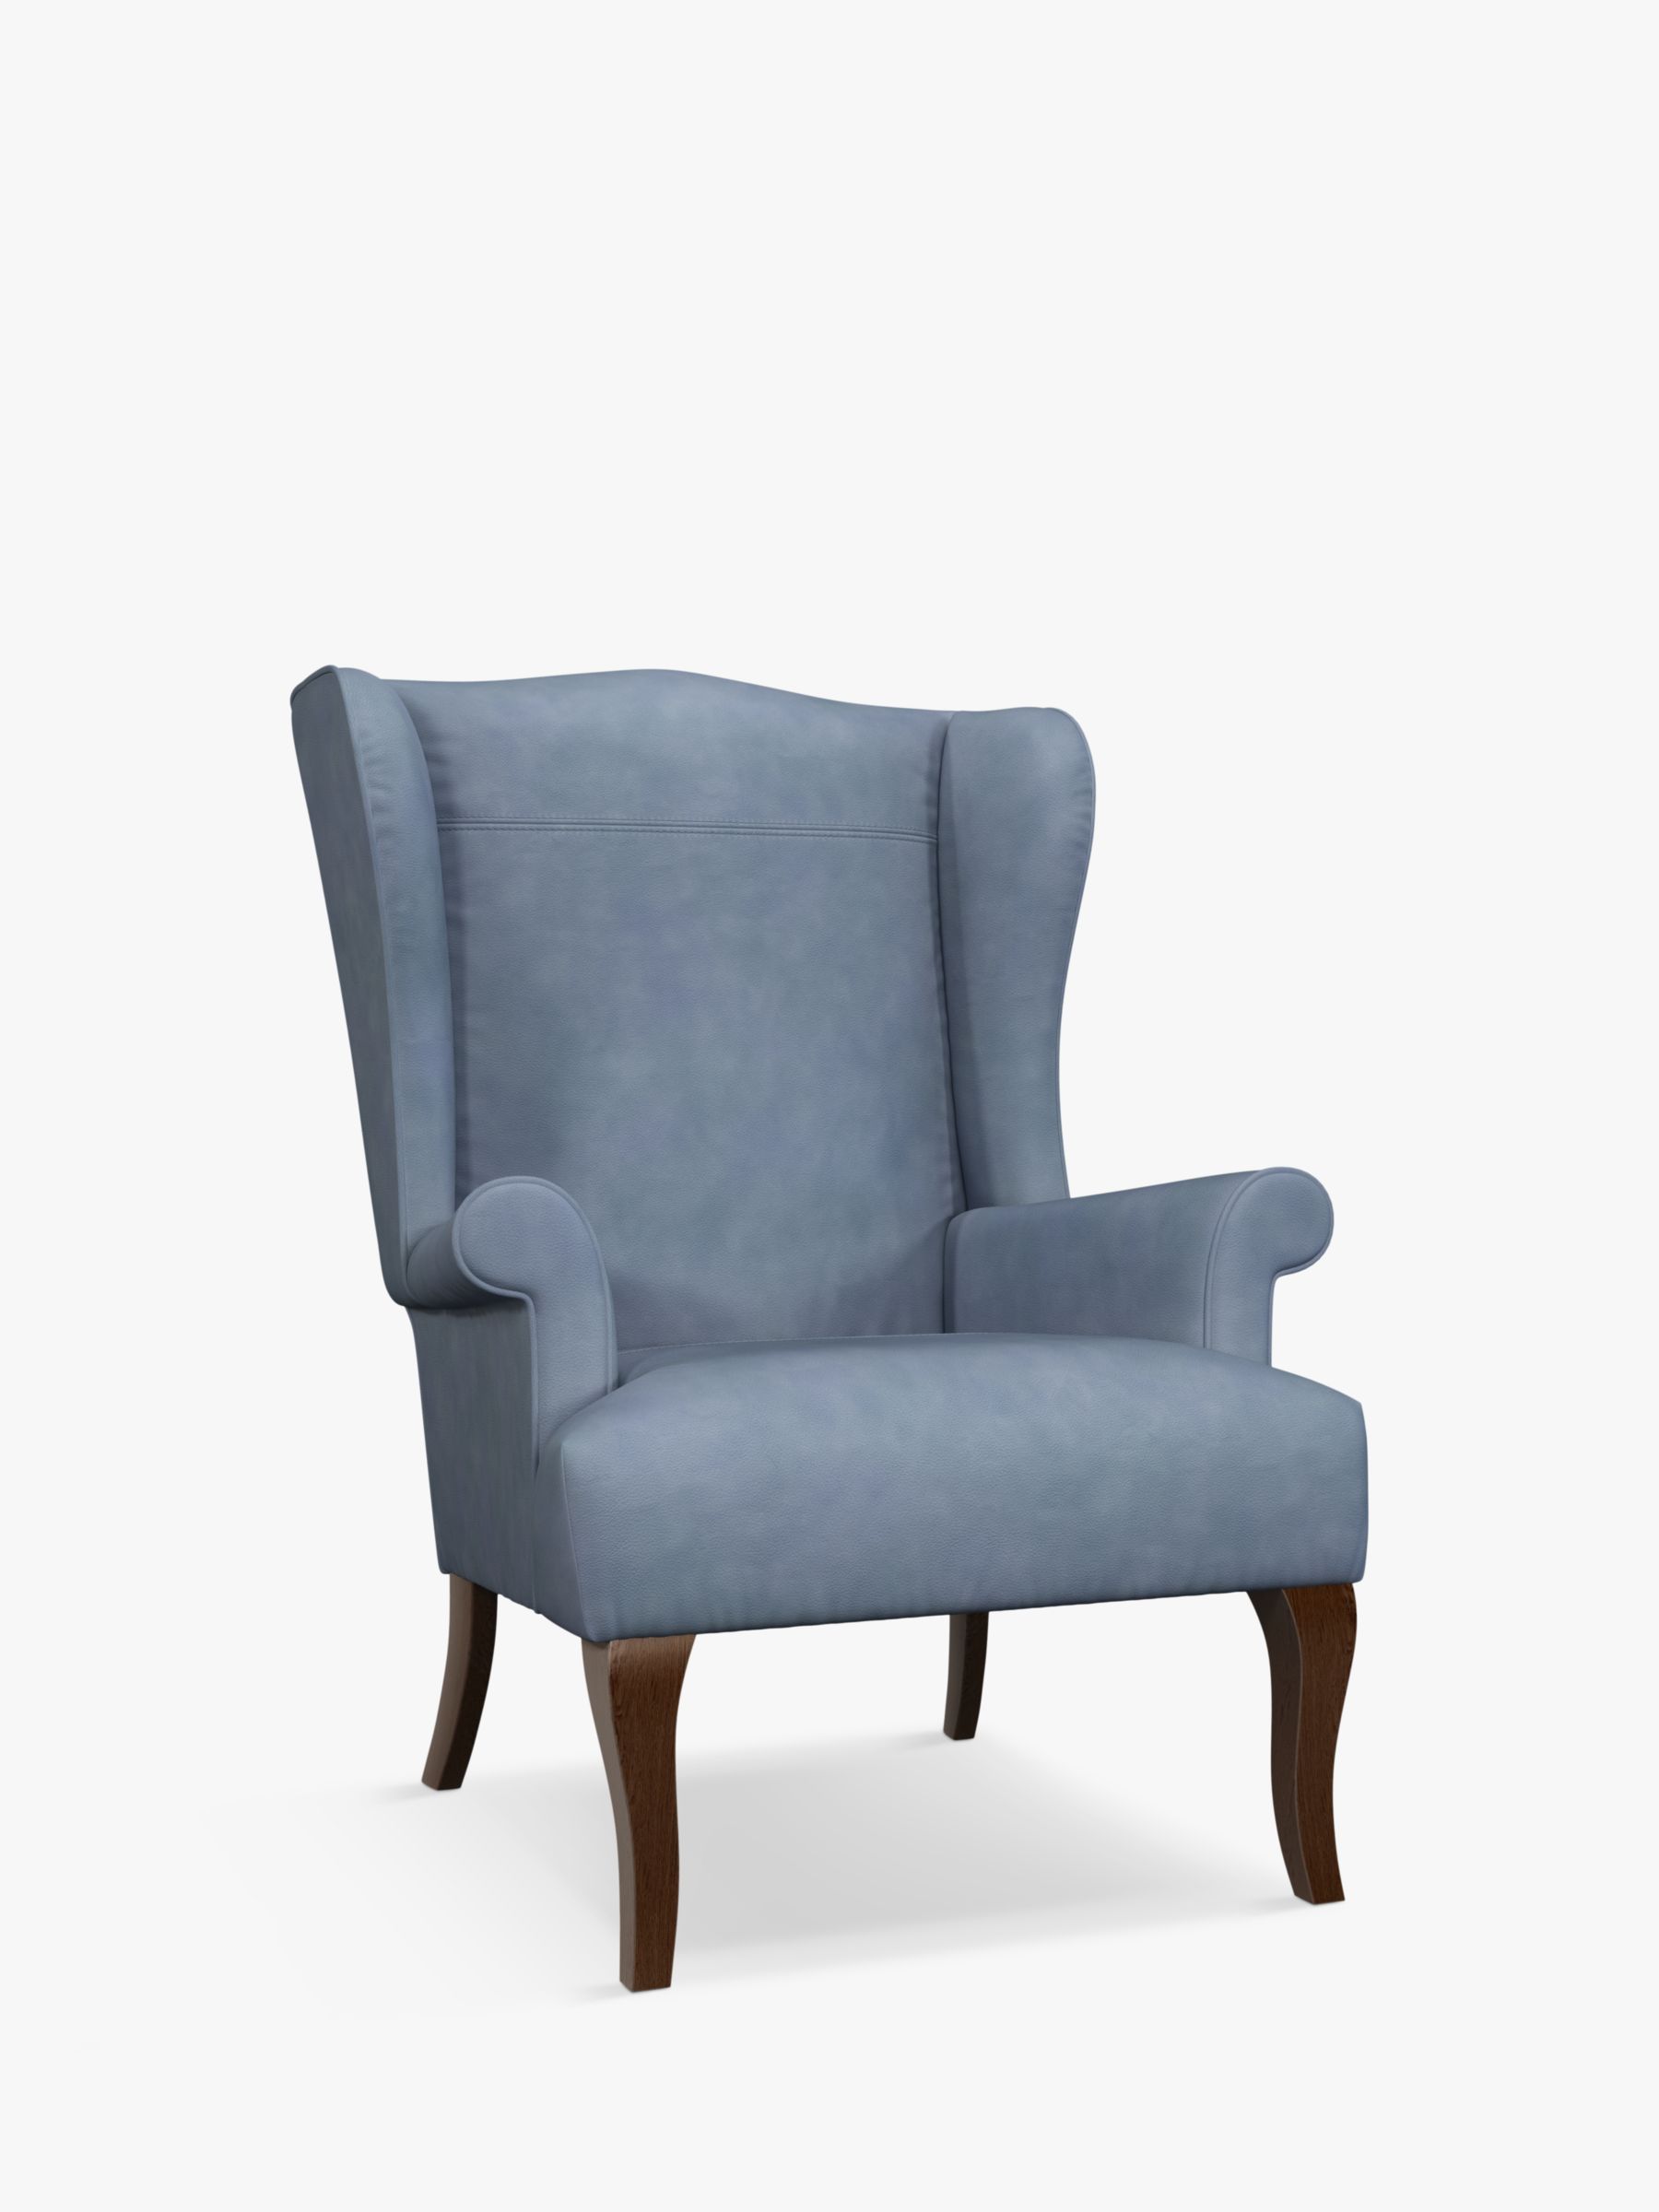 Shaftesbury Range, John Lewis Shaftesbury Leather Wing Chair, Dark Leg, Soft Touch Blue